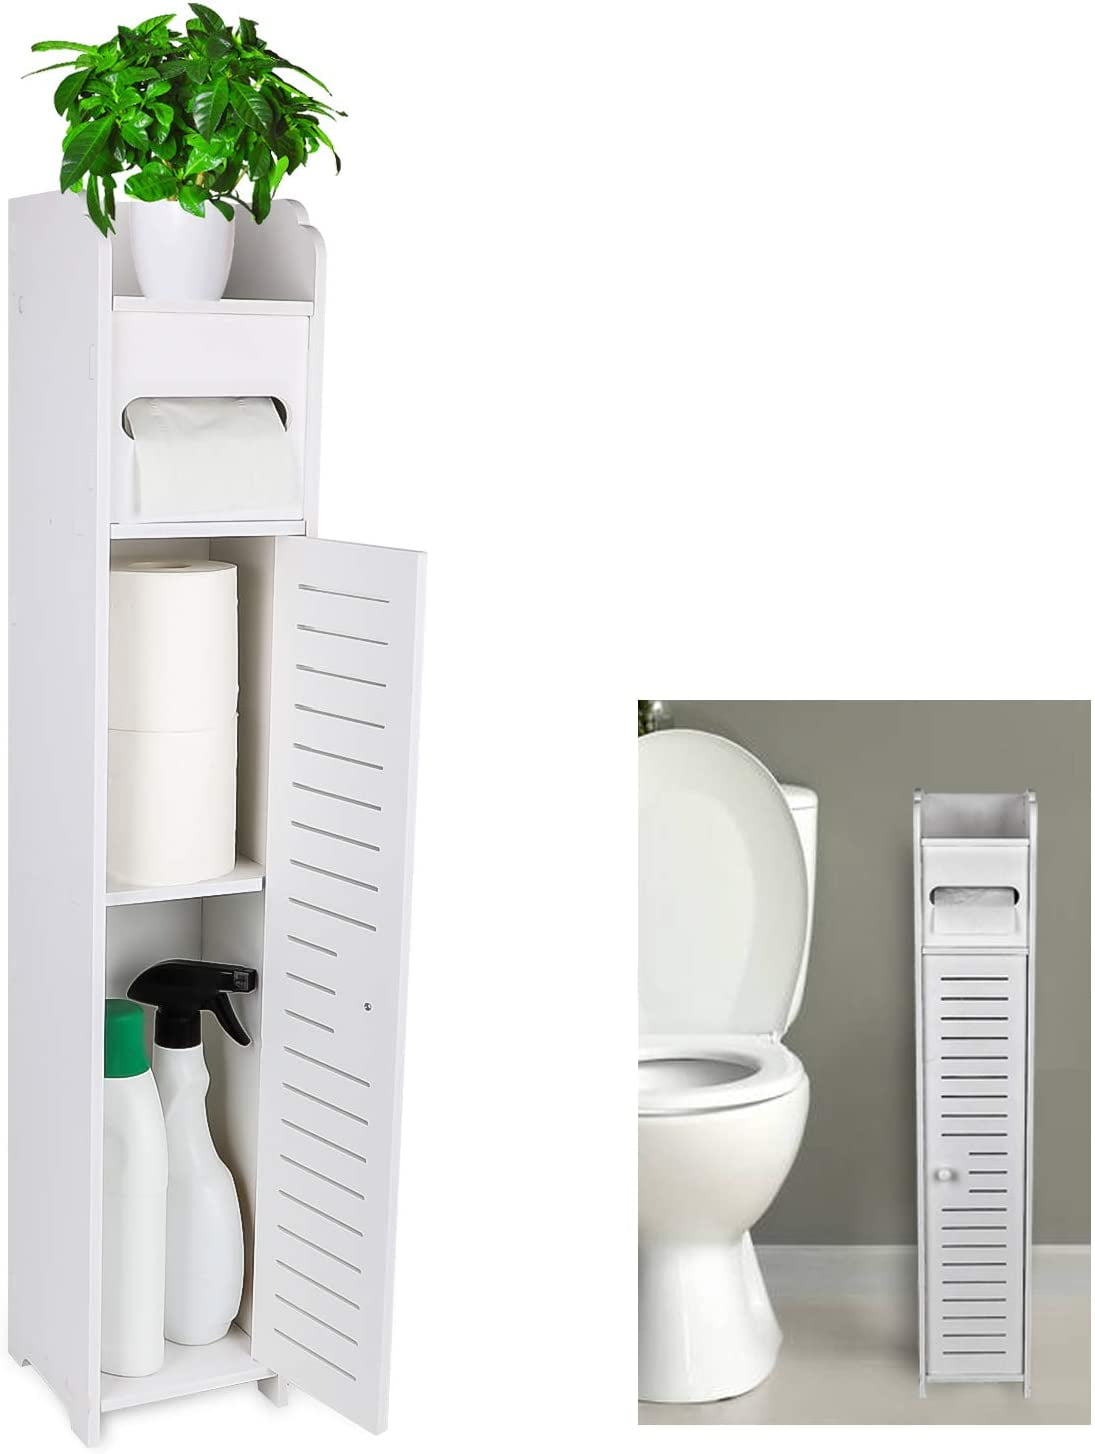 4-Tier Paper Towel Storage Bathroom Narrow Cabinet with Tissues Box Organizer 